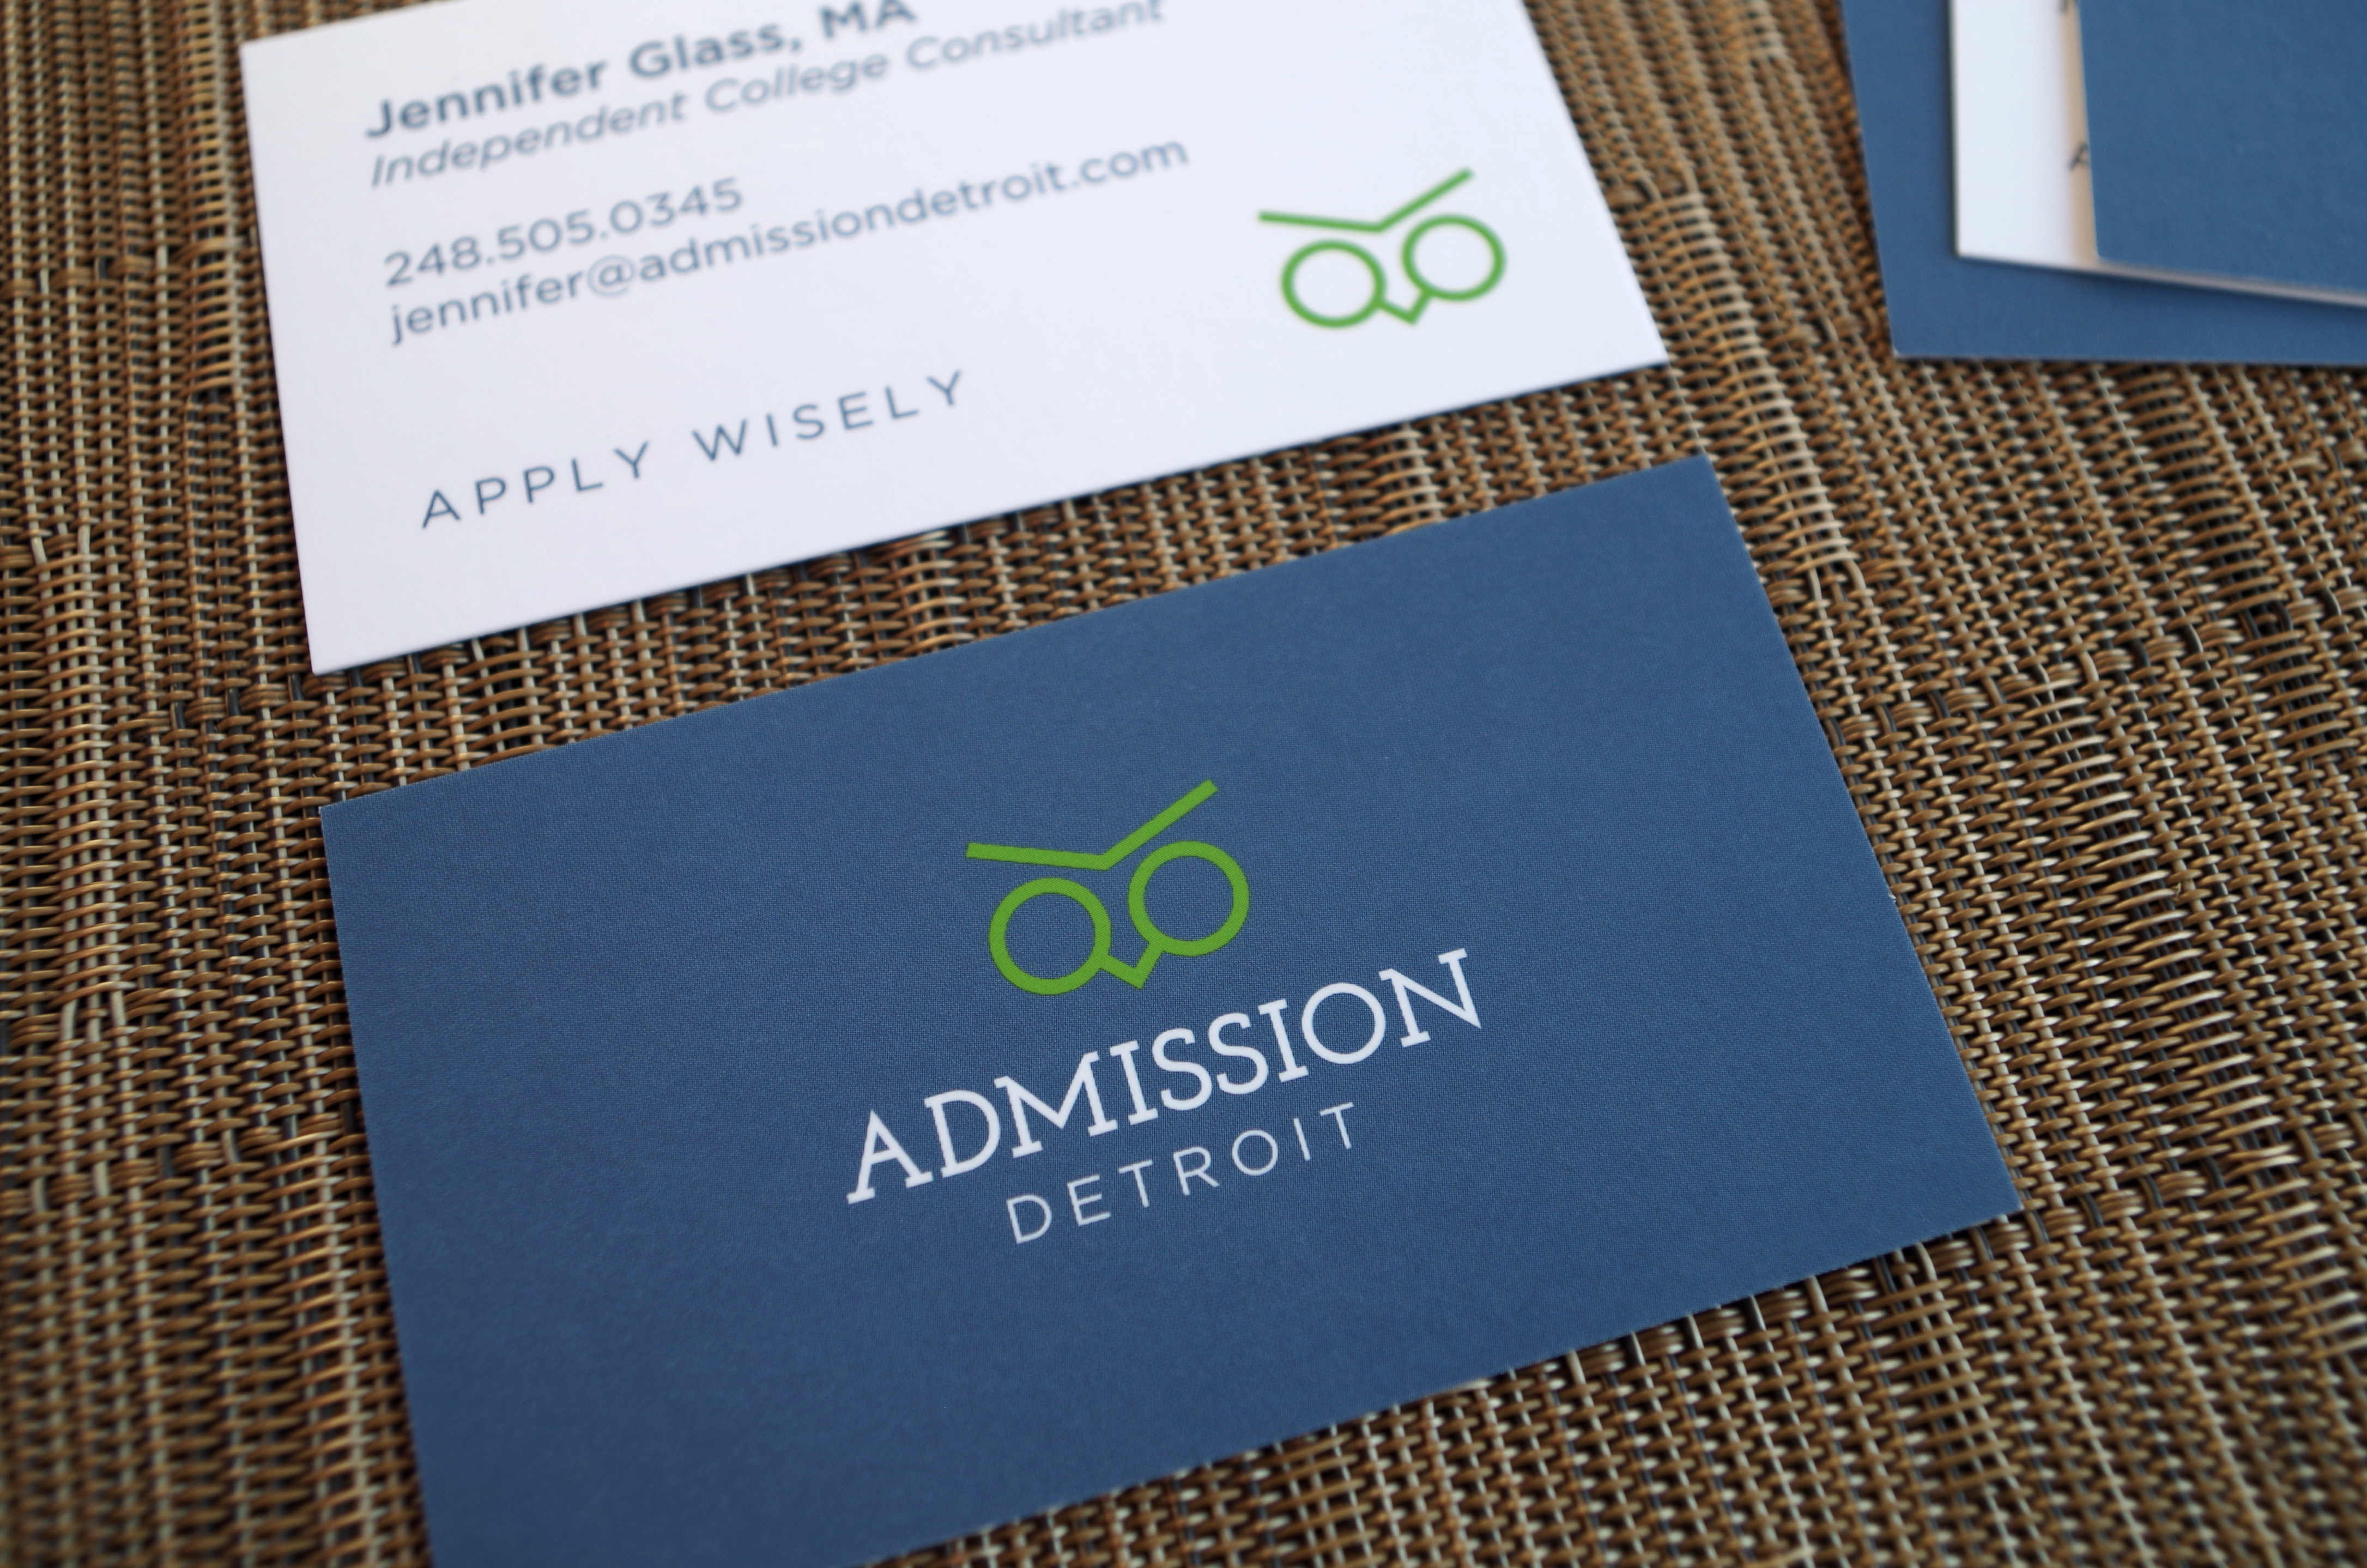 Admission Detroit Business Card